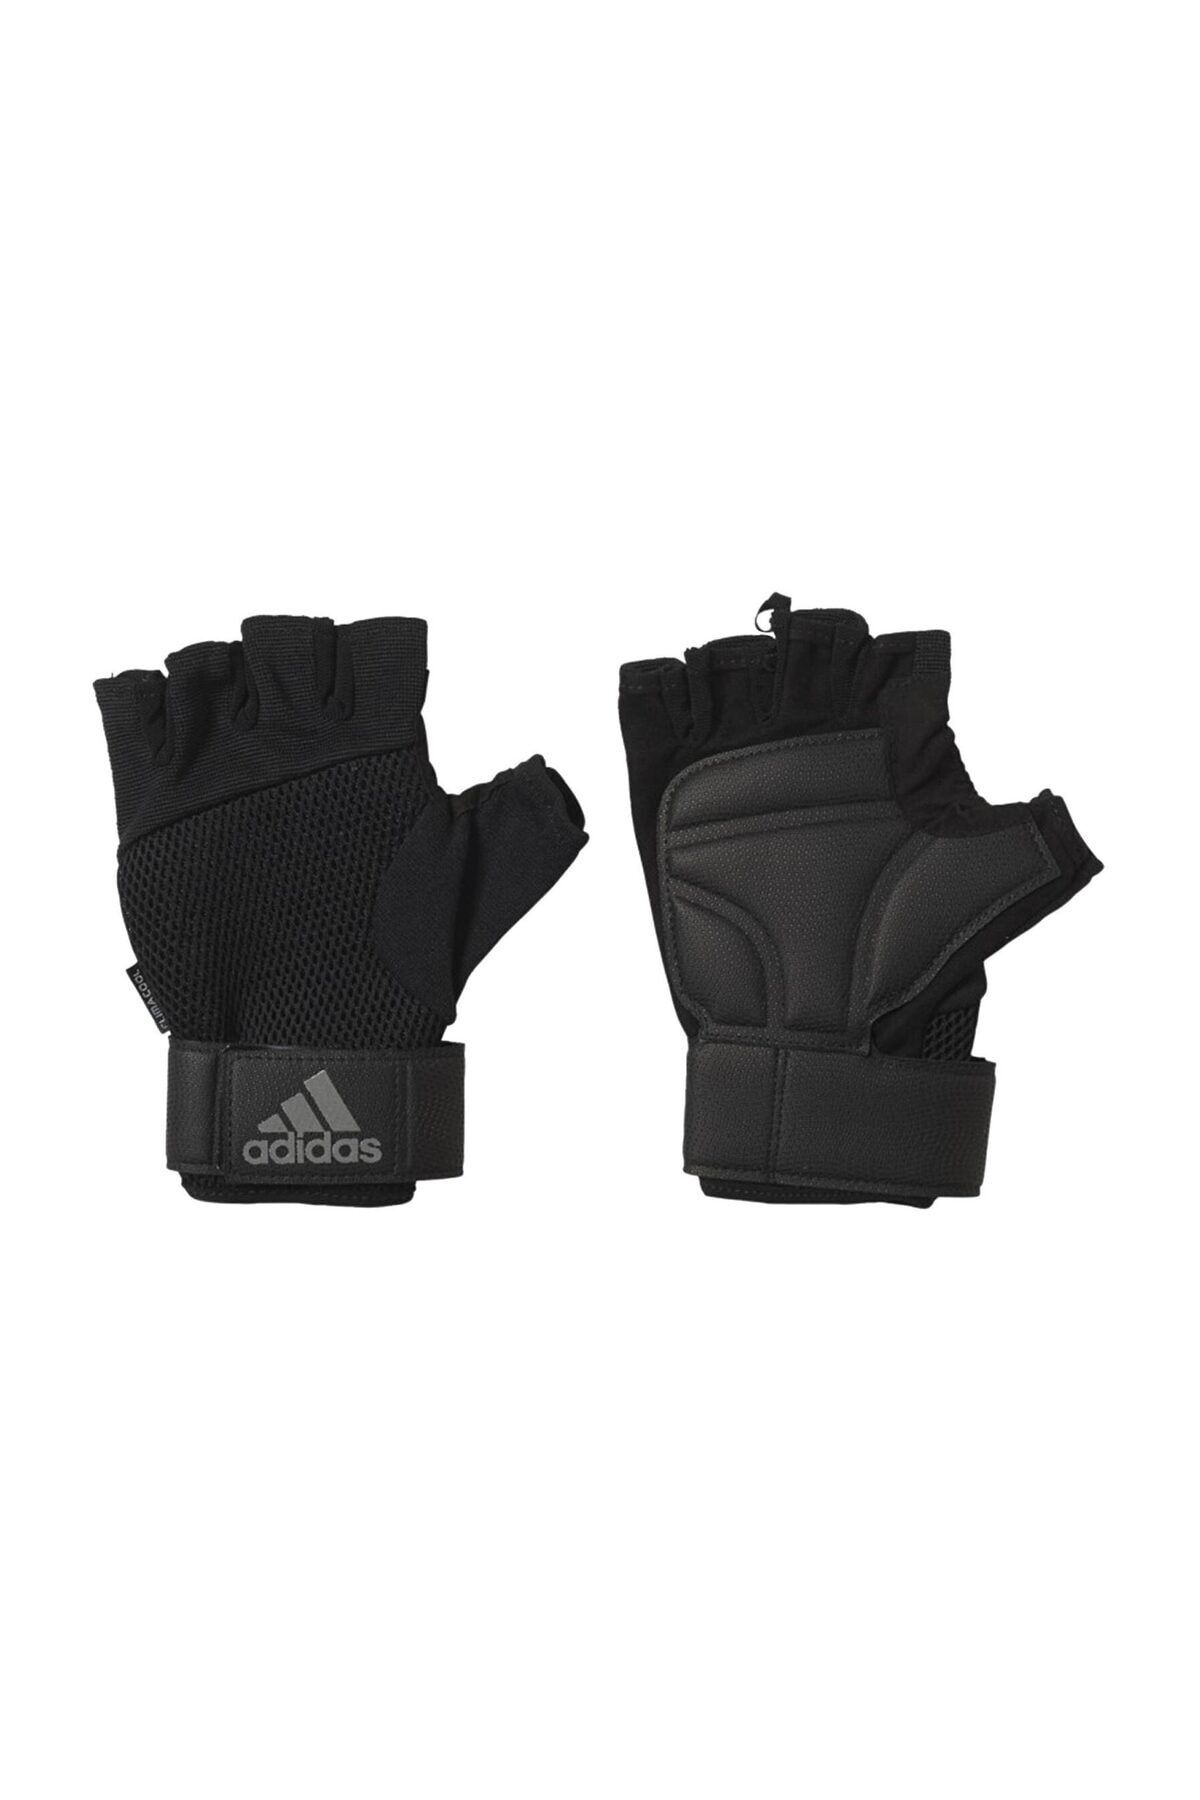 adidas Perf Gloves Eldiven AJ9508 Siyah